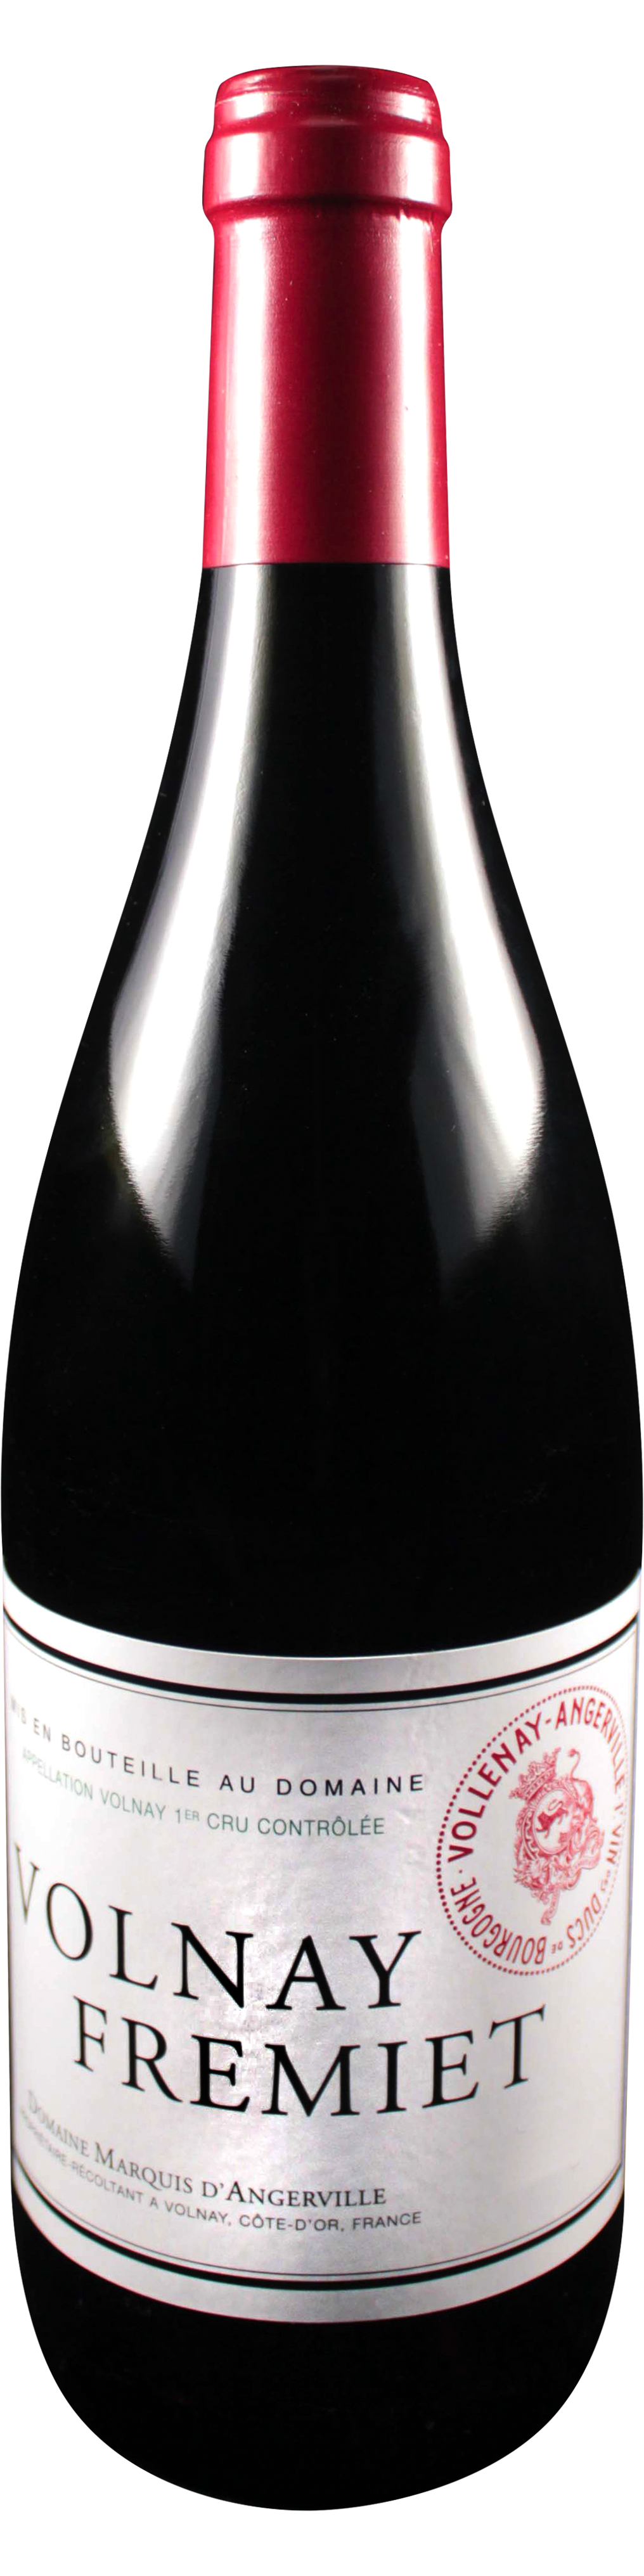 Bottle shot of 2012 Volnay 1er Cru Fremiet